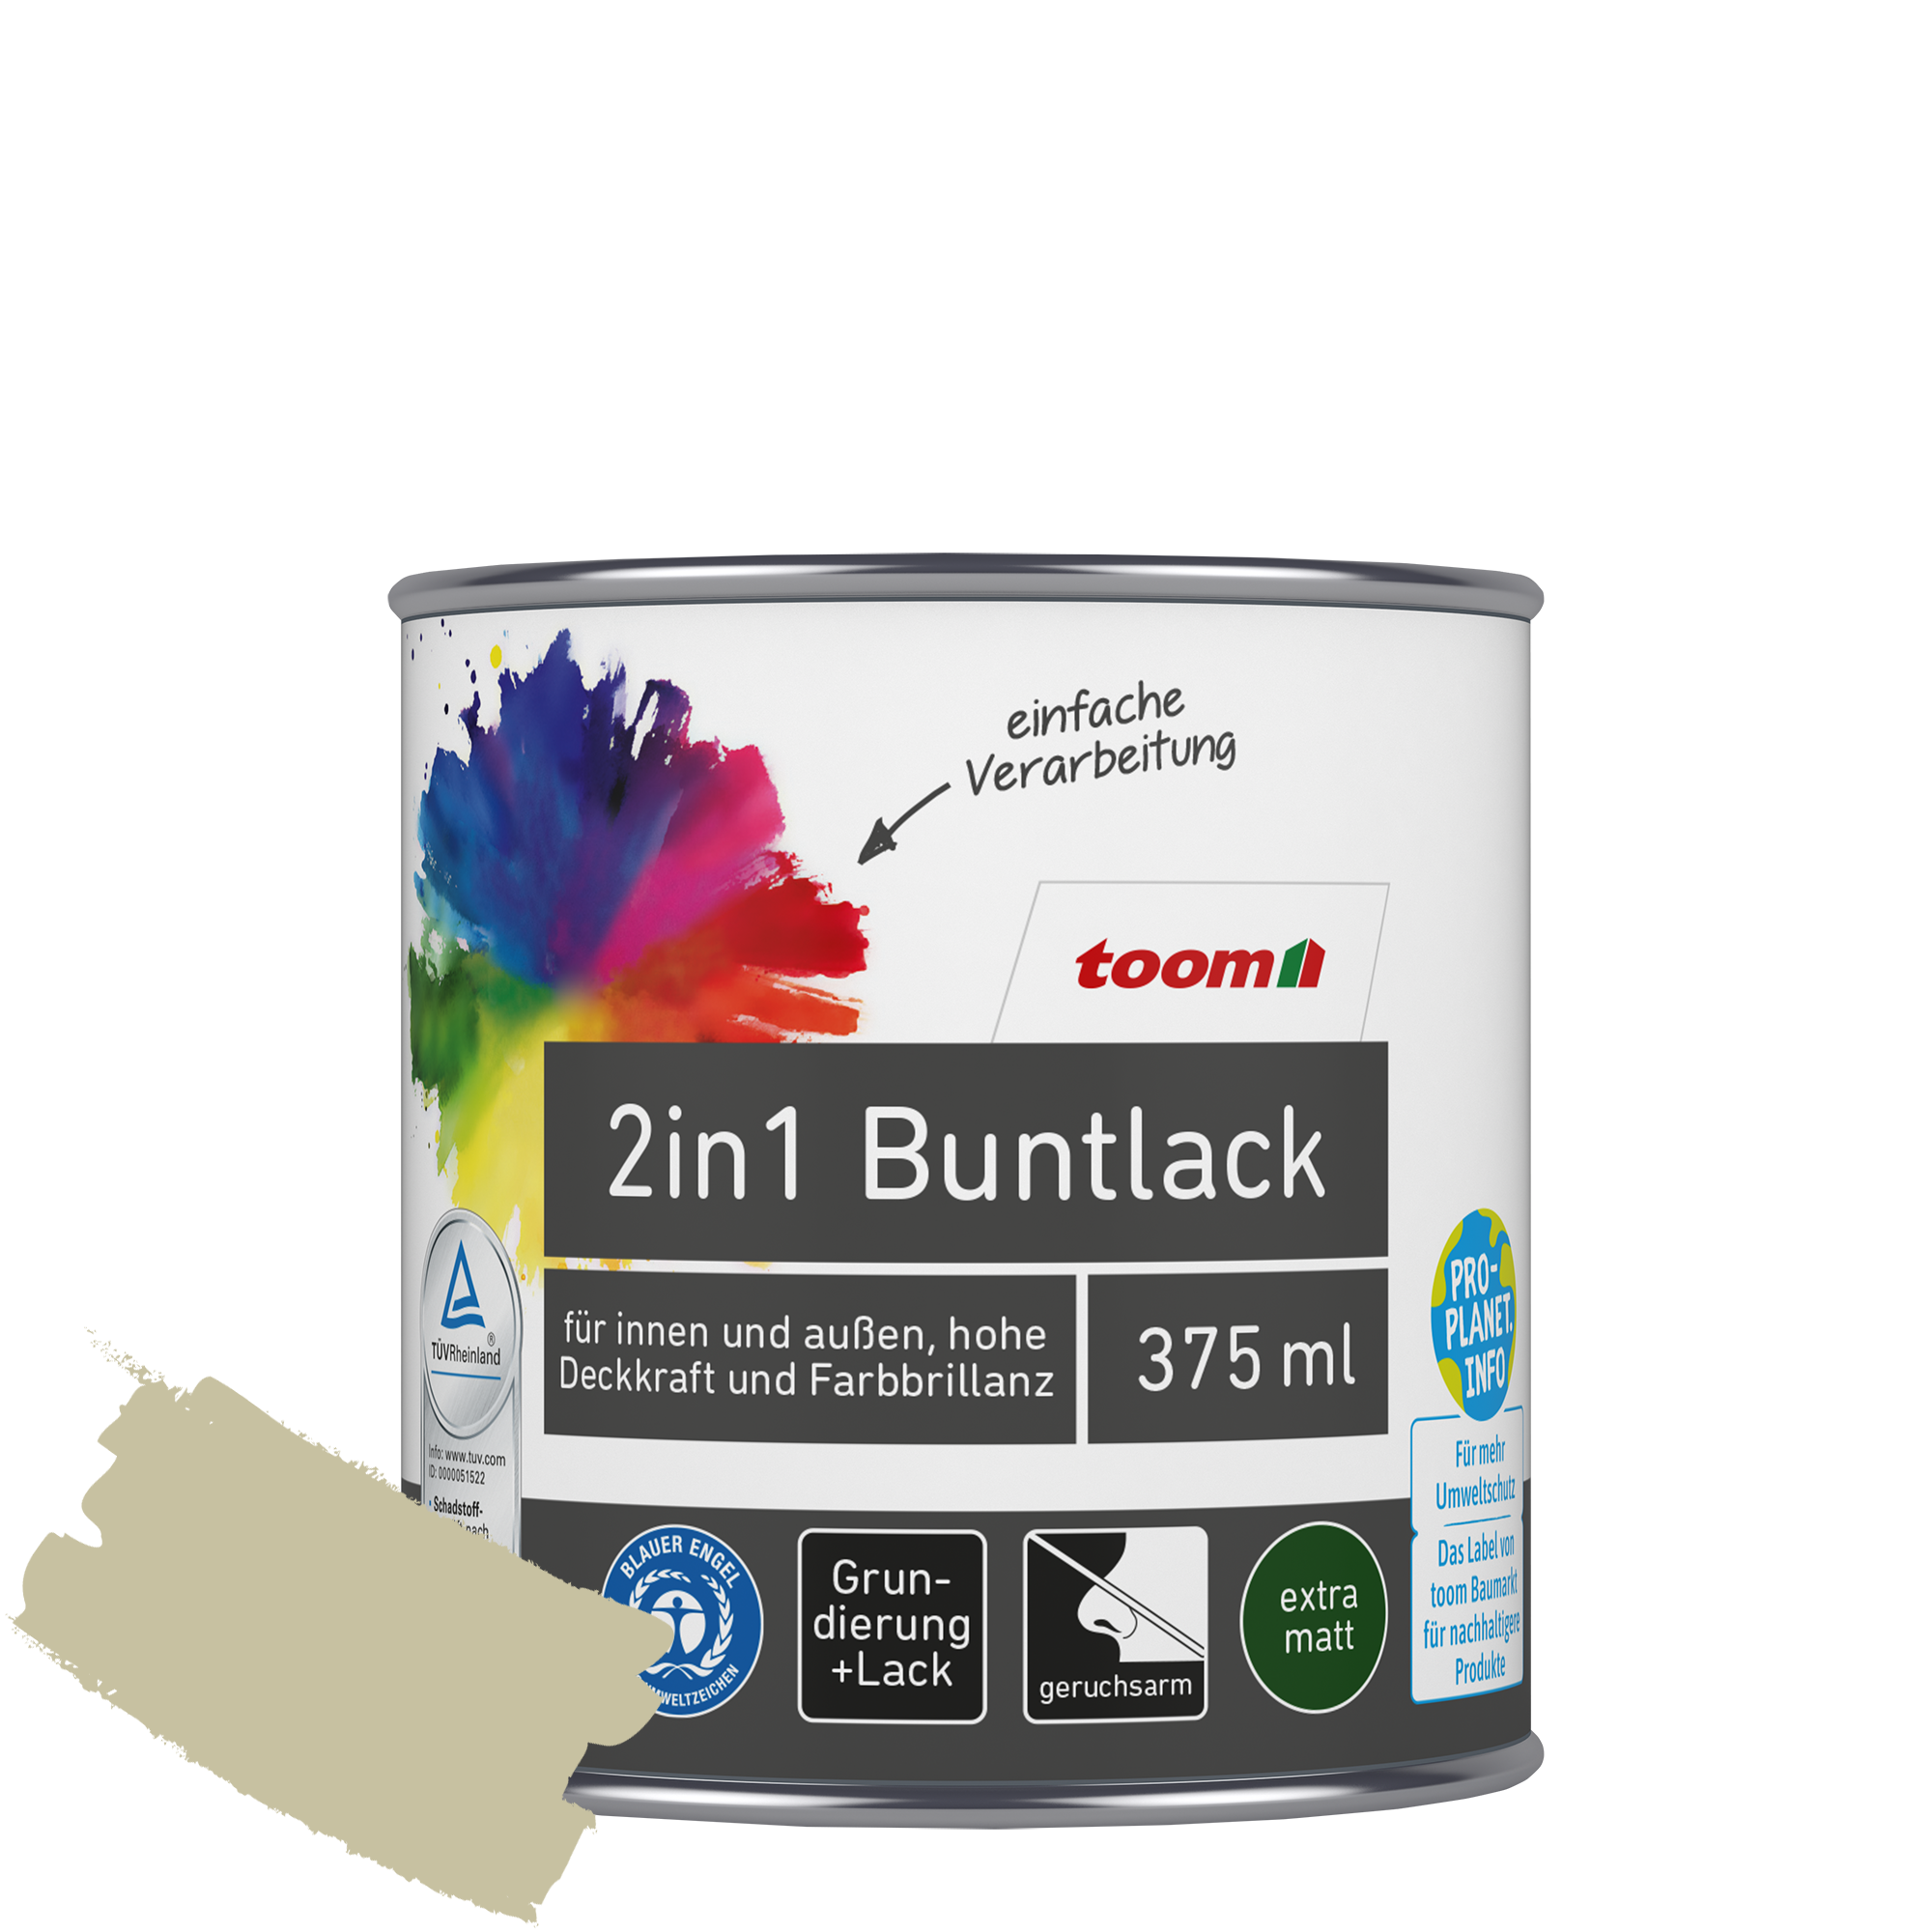 2in1 Buntlack 'Salbeiduft' zartgrün matt 375 ml + product picture